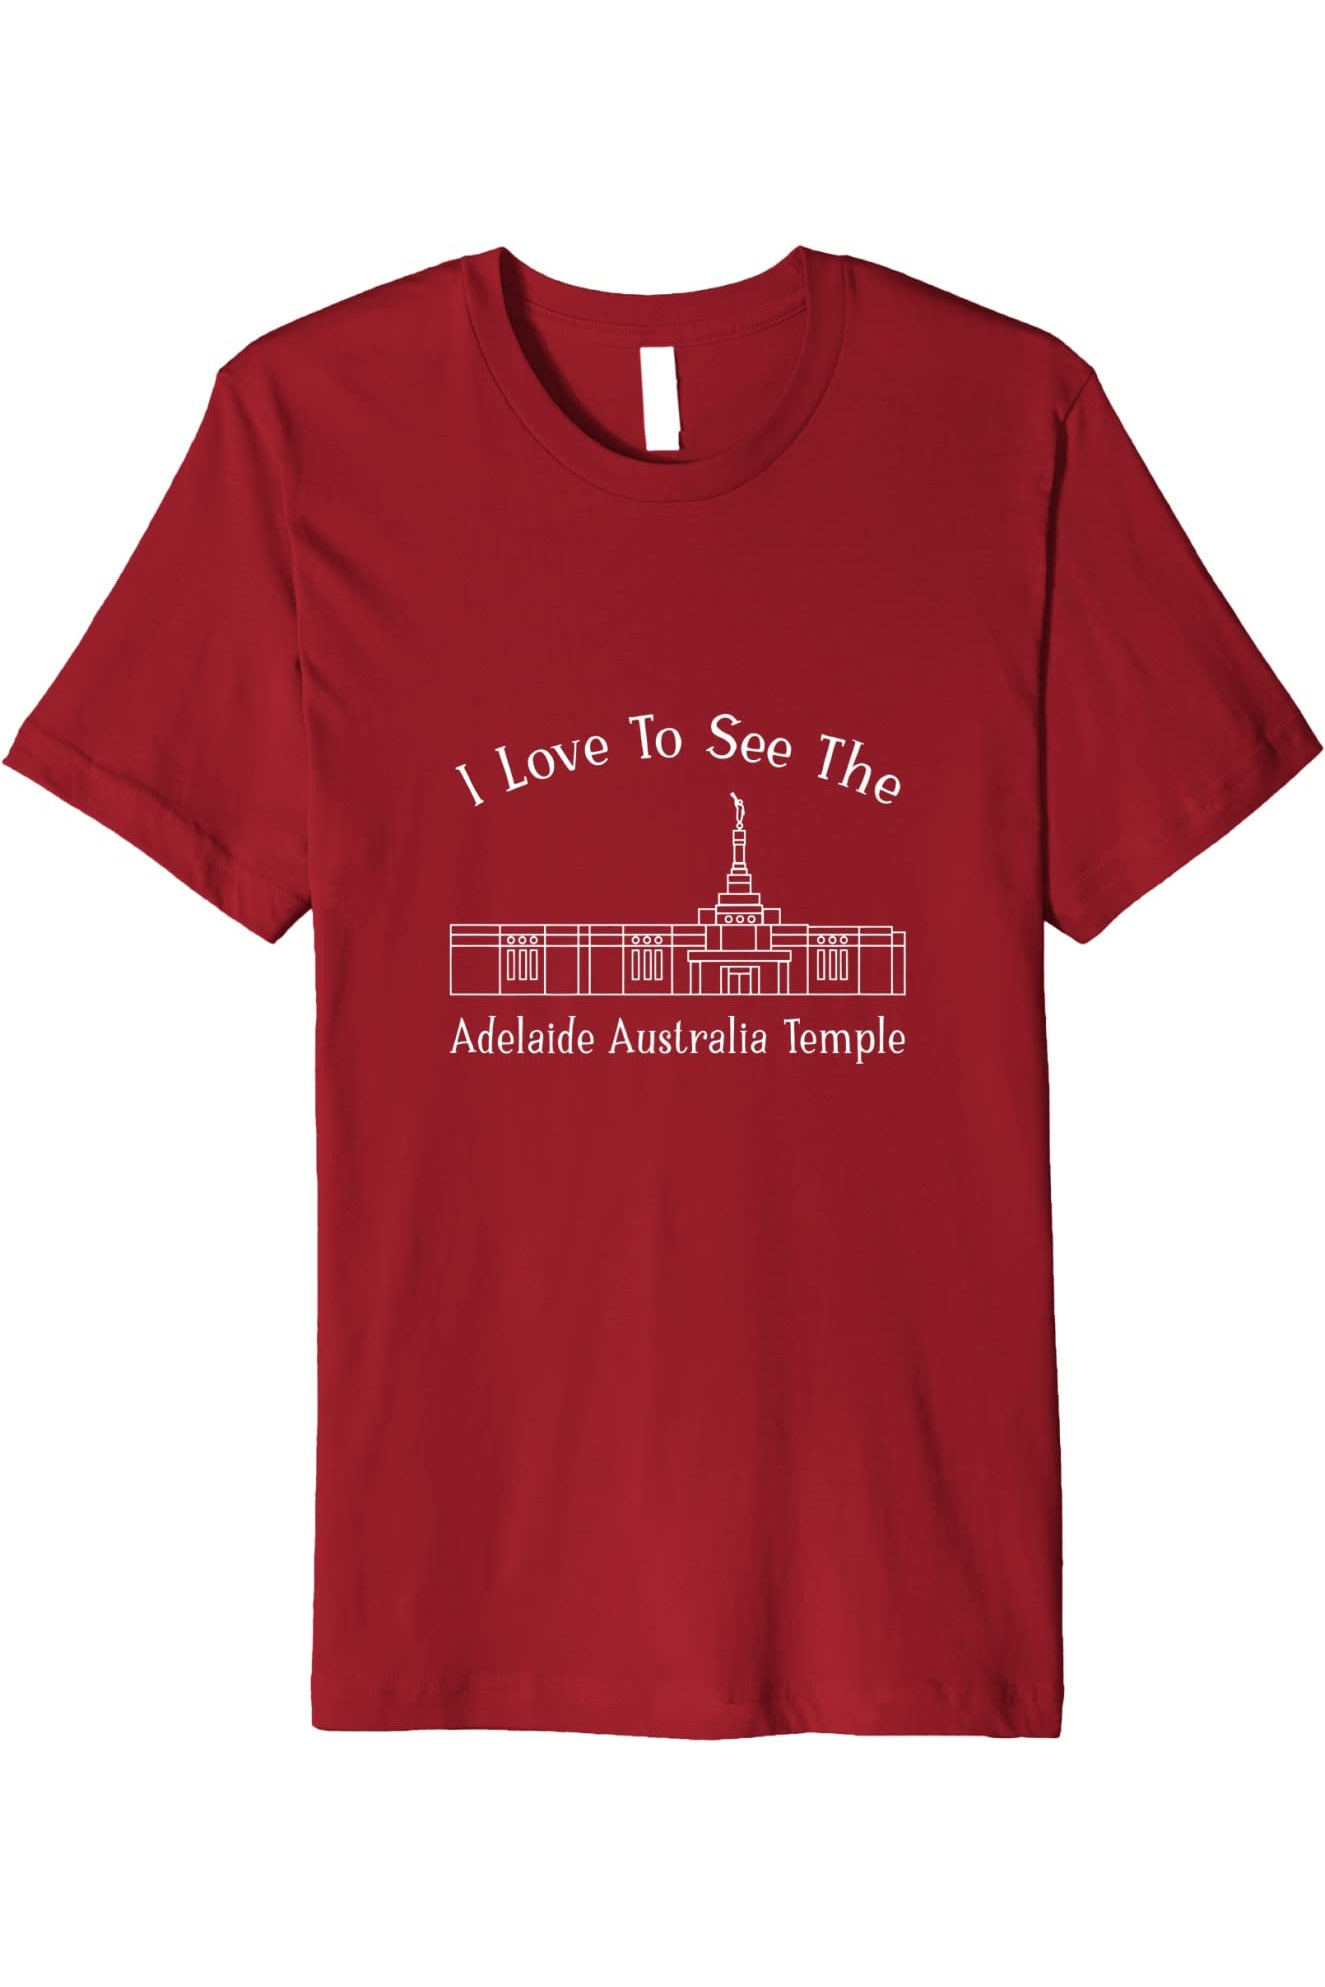 Adelaide Australia Temple T-Shirt - Premium - Happy Style (English) US